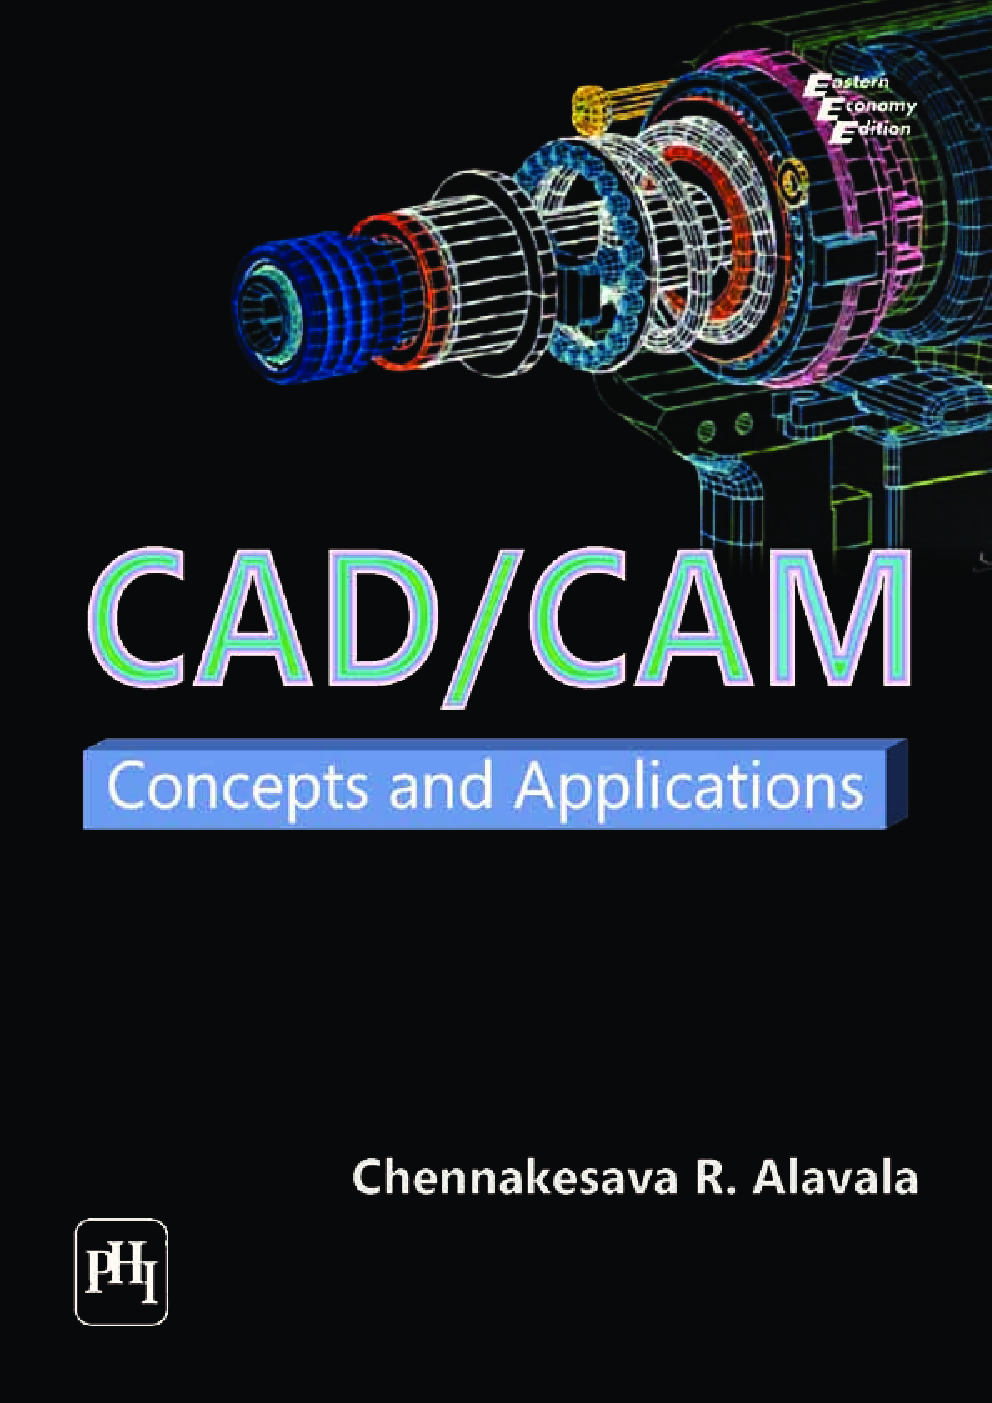 cad/cam by chennakesava r alavala pdf